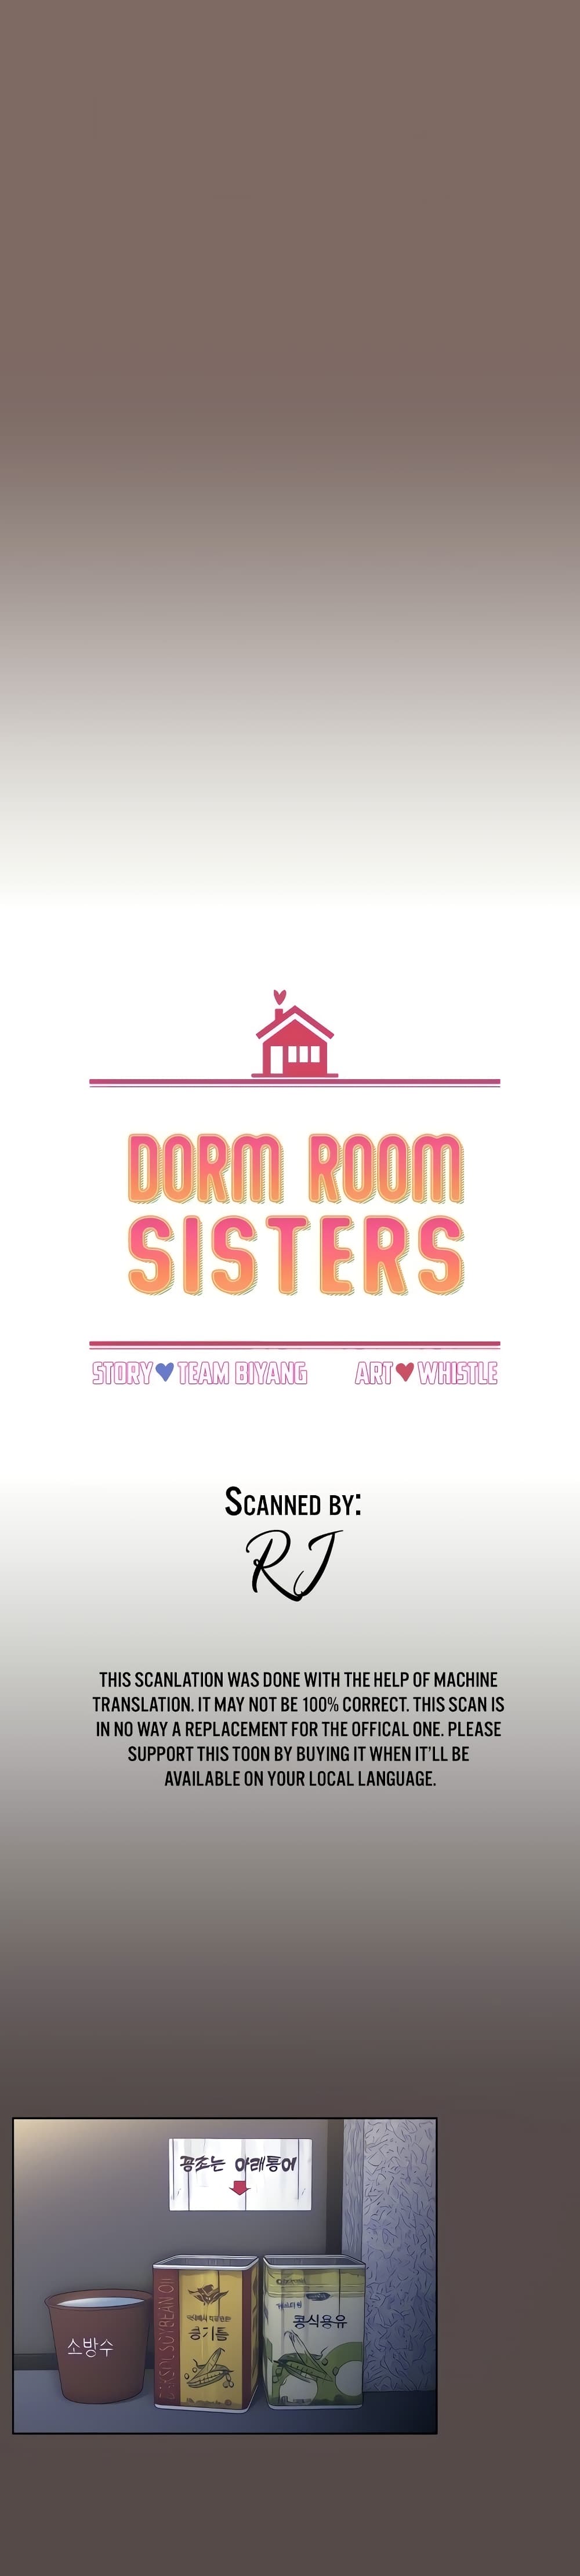 Dorm Room Sisters 1 (14)